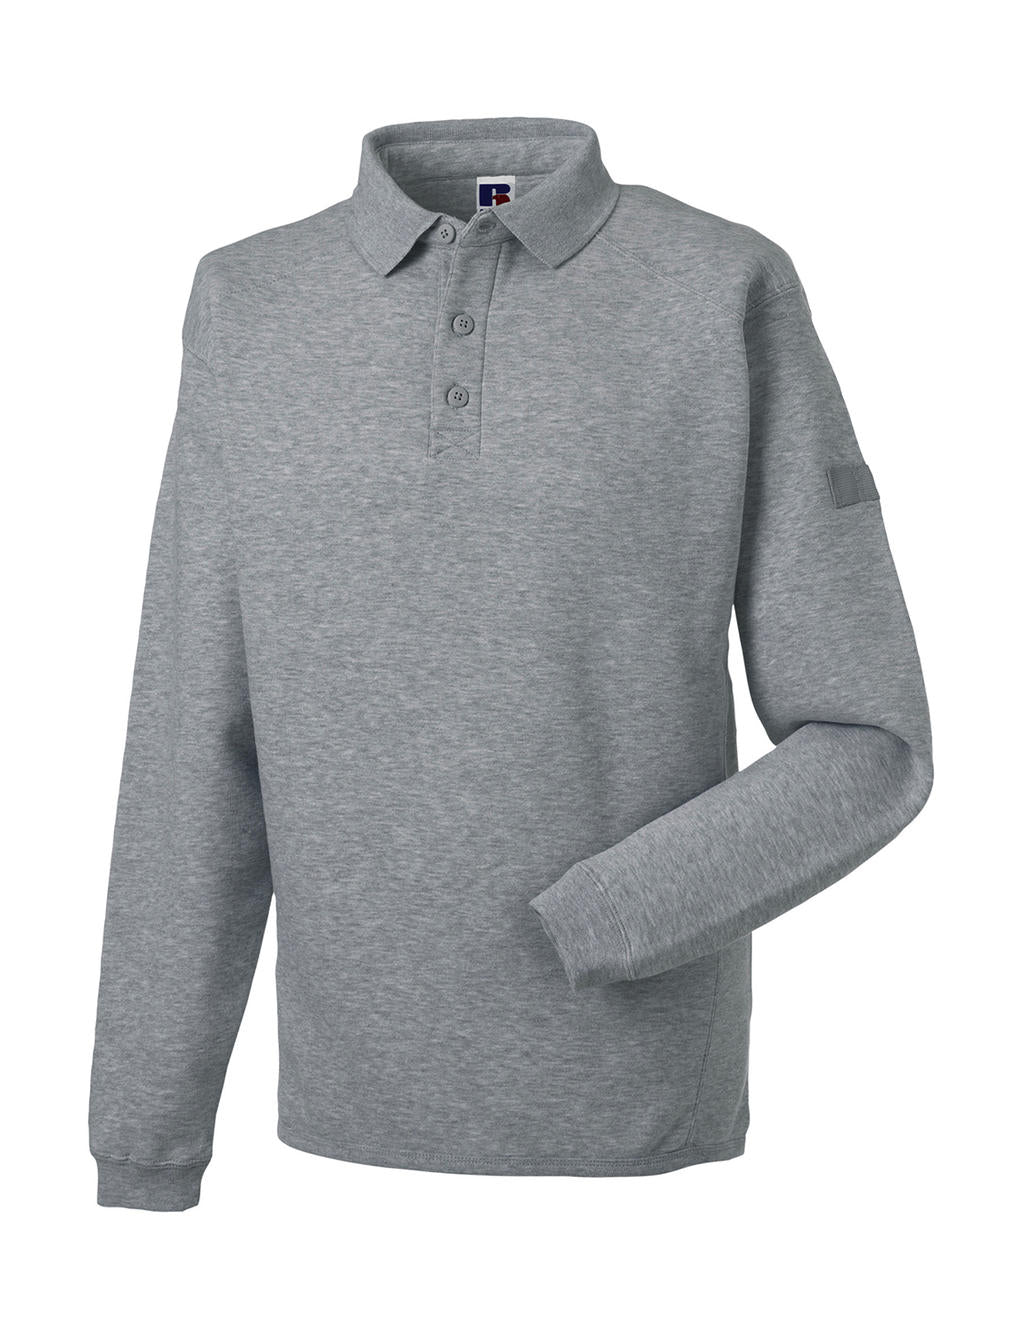 Russel Herren Workwear Polo Pullover Sweater Sweatshirt Pulli langarm